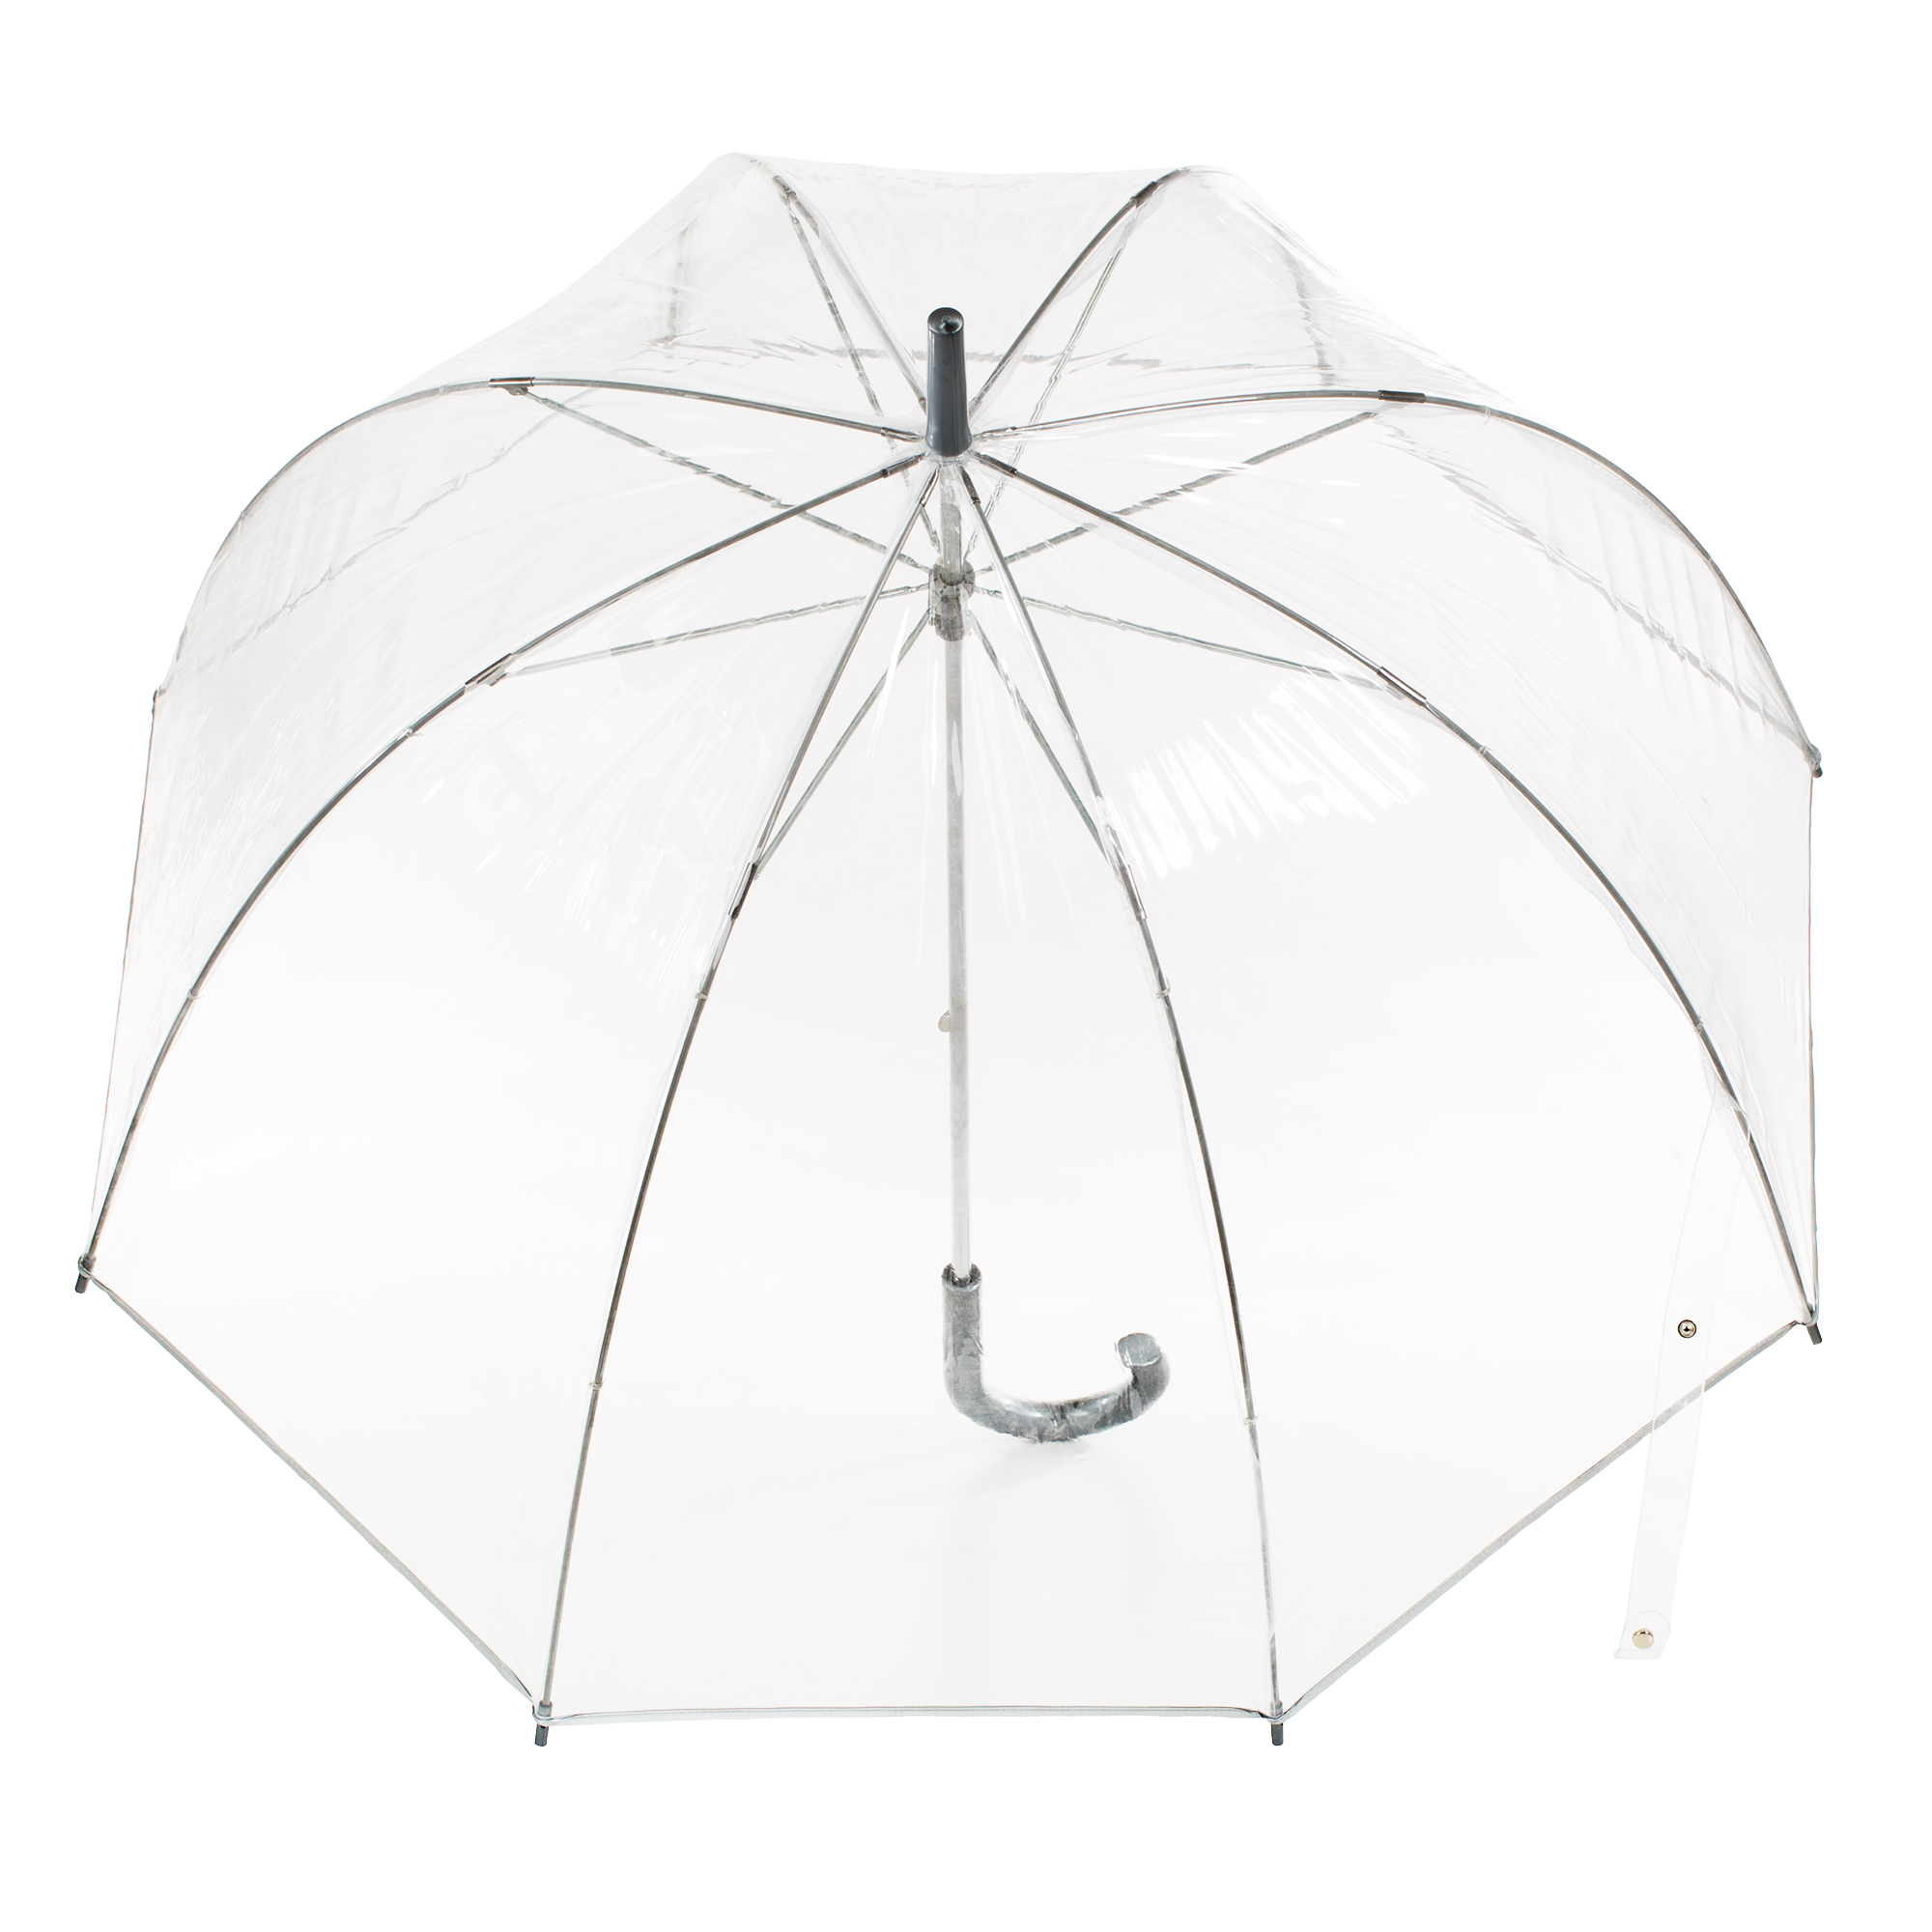 Totes Classic Canopy Clear Bubble Umbrella - image 2 of 6